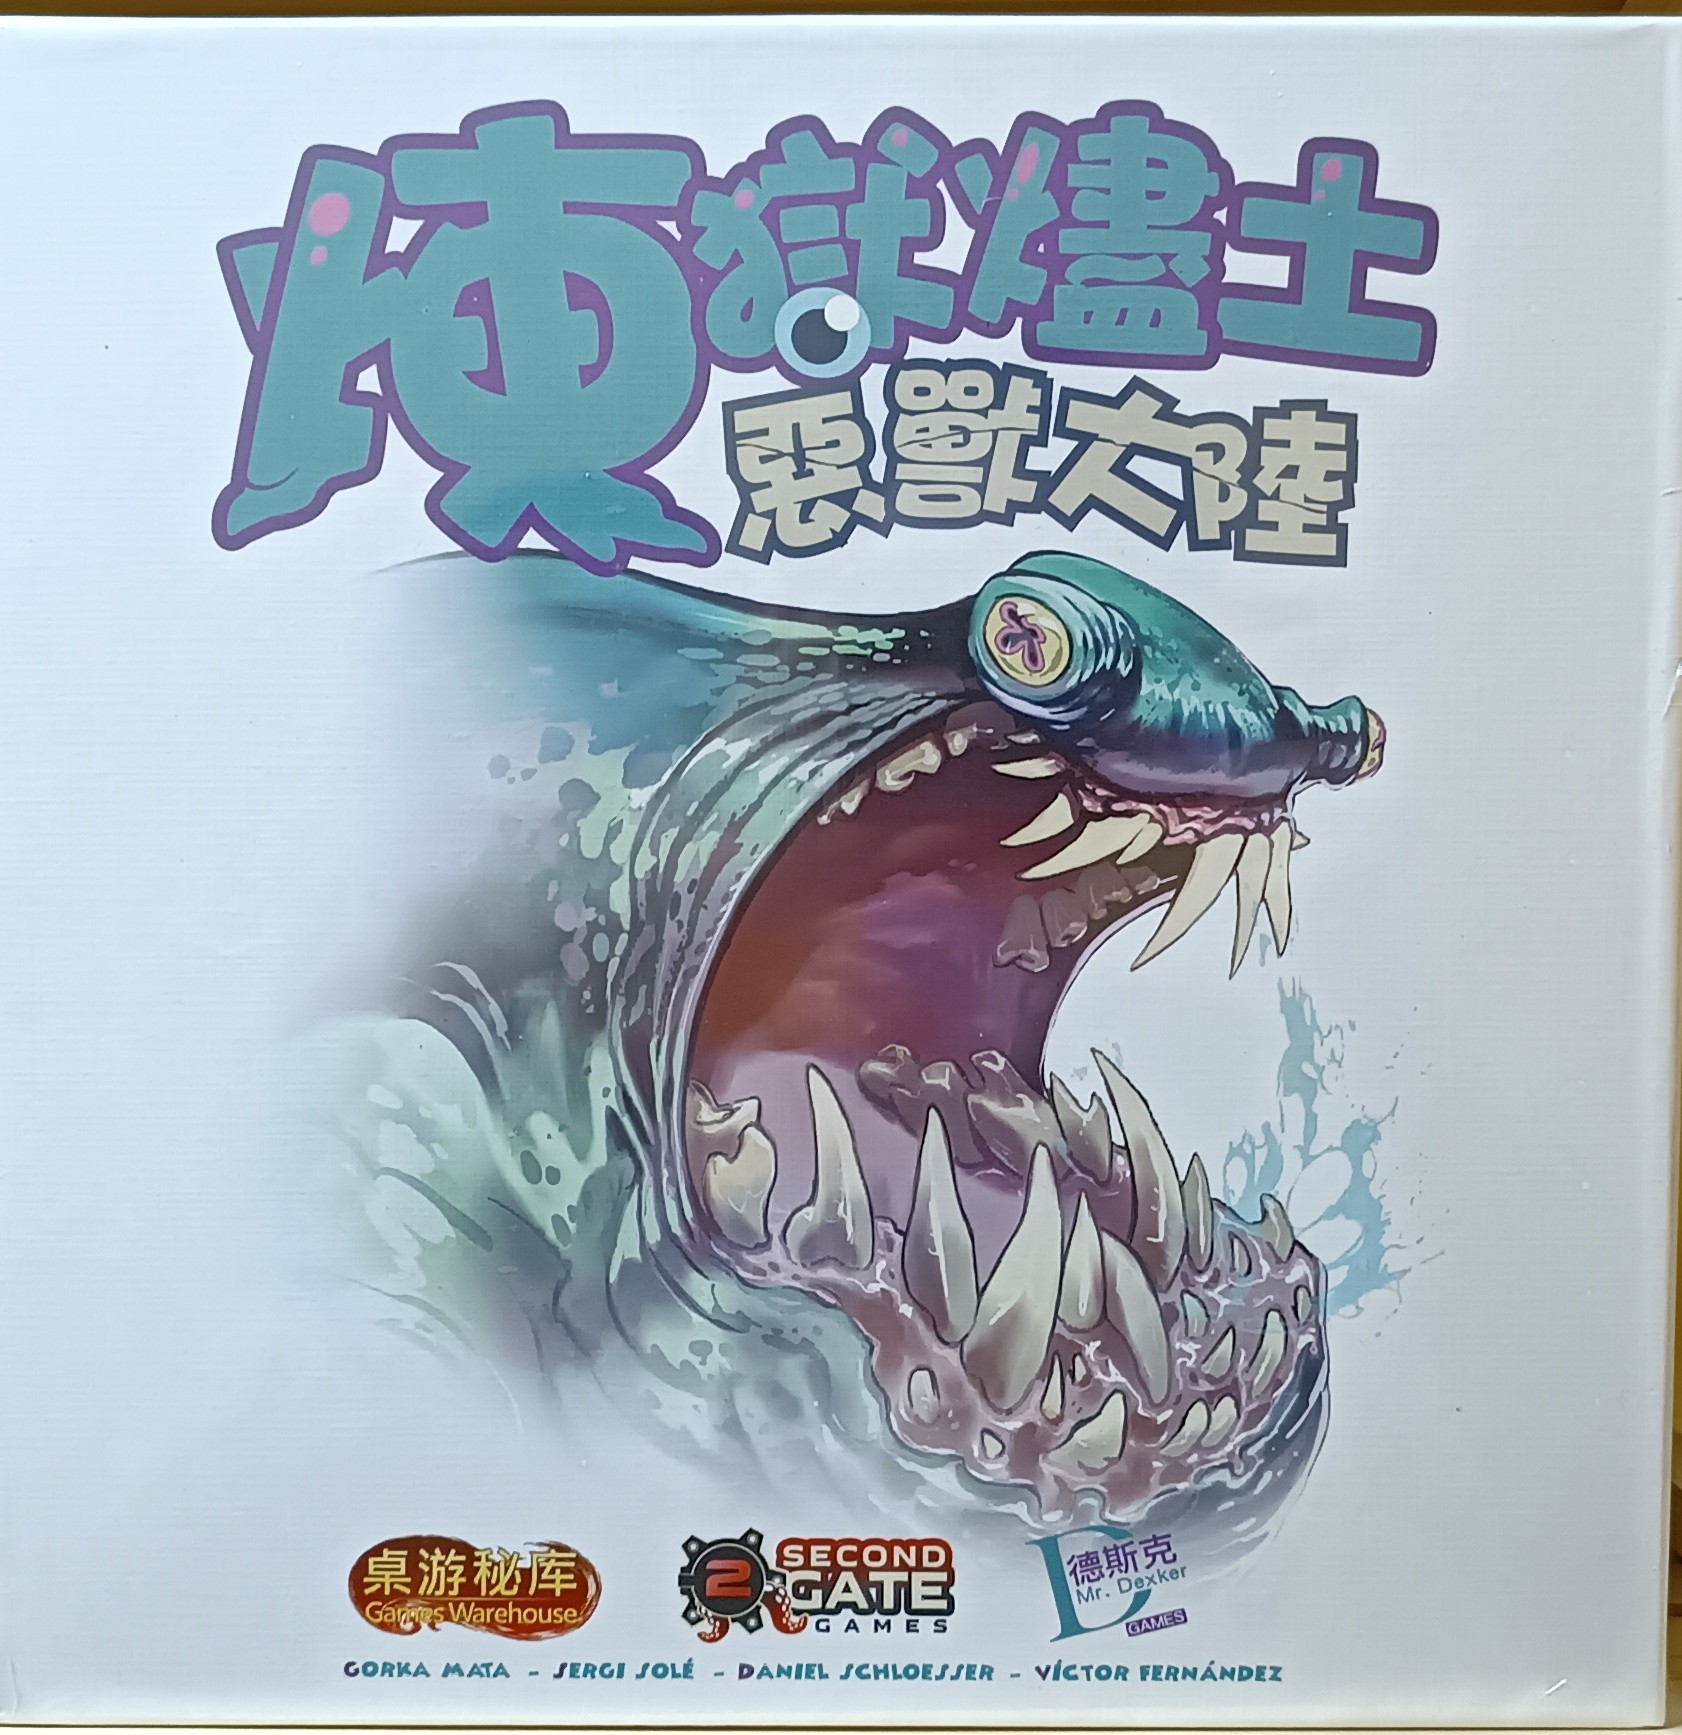 Настольная игра Second Gate Games Monster Lands Retail version на английском языке настольная игра pencil first games pfx1000 skulk hollow на английском языке